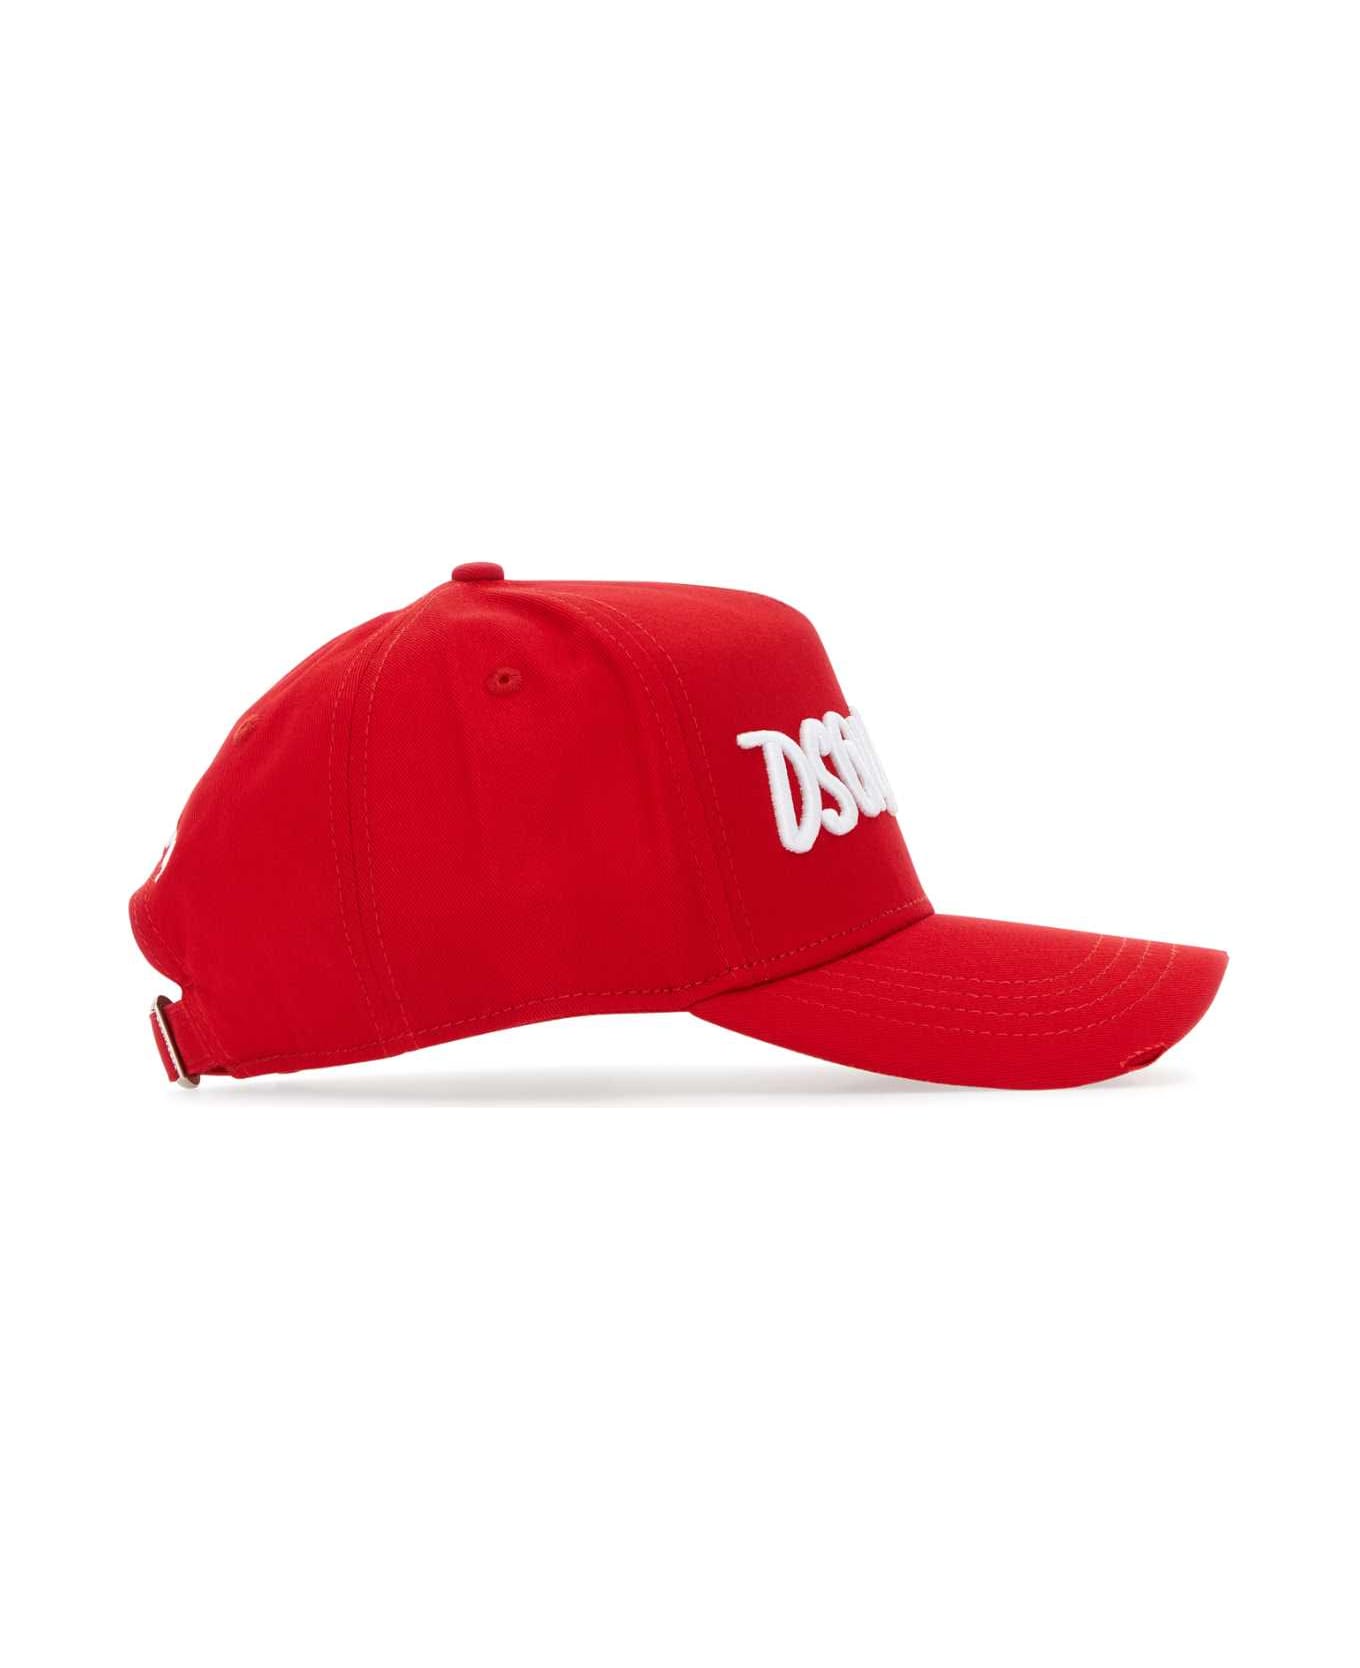 Dsquared2 Red Cotton Baseball Cap - M818 帽子